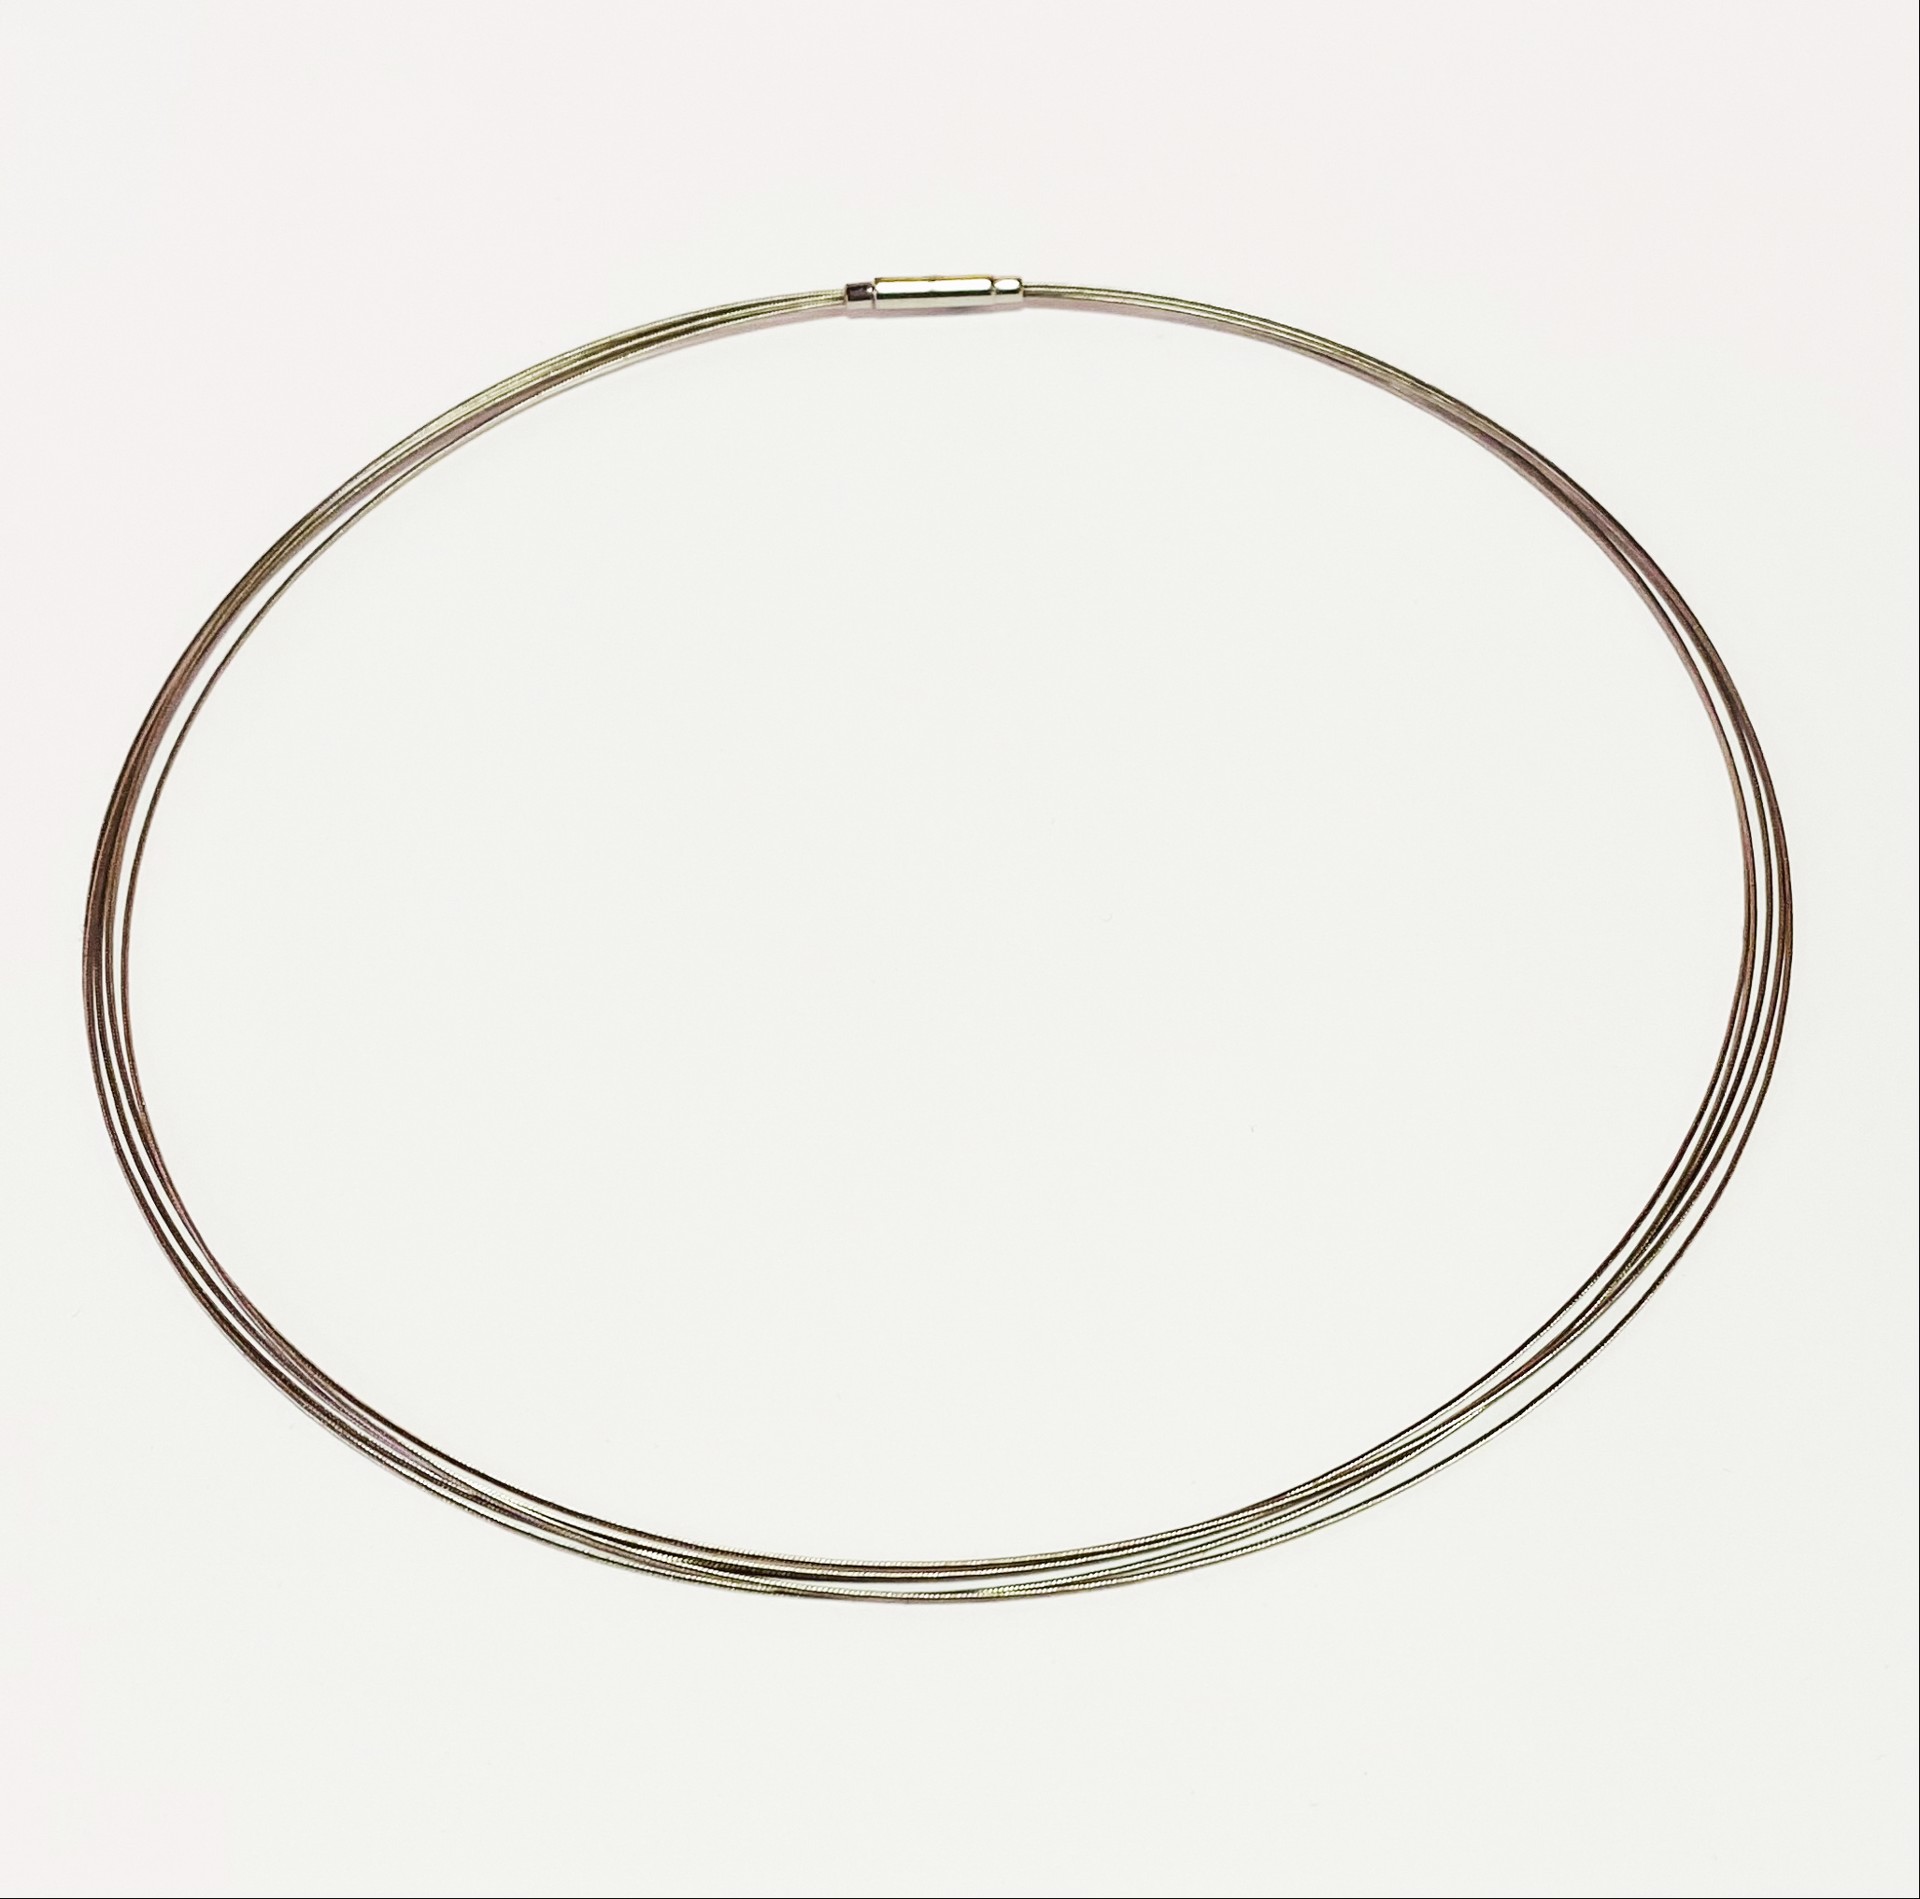 Steel Wire Collar by TOM MCGURRIN